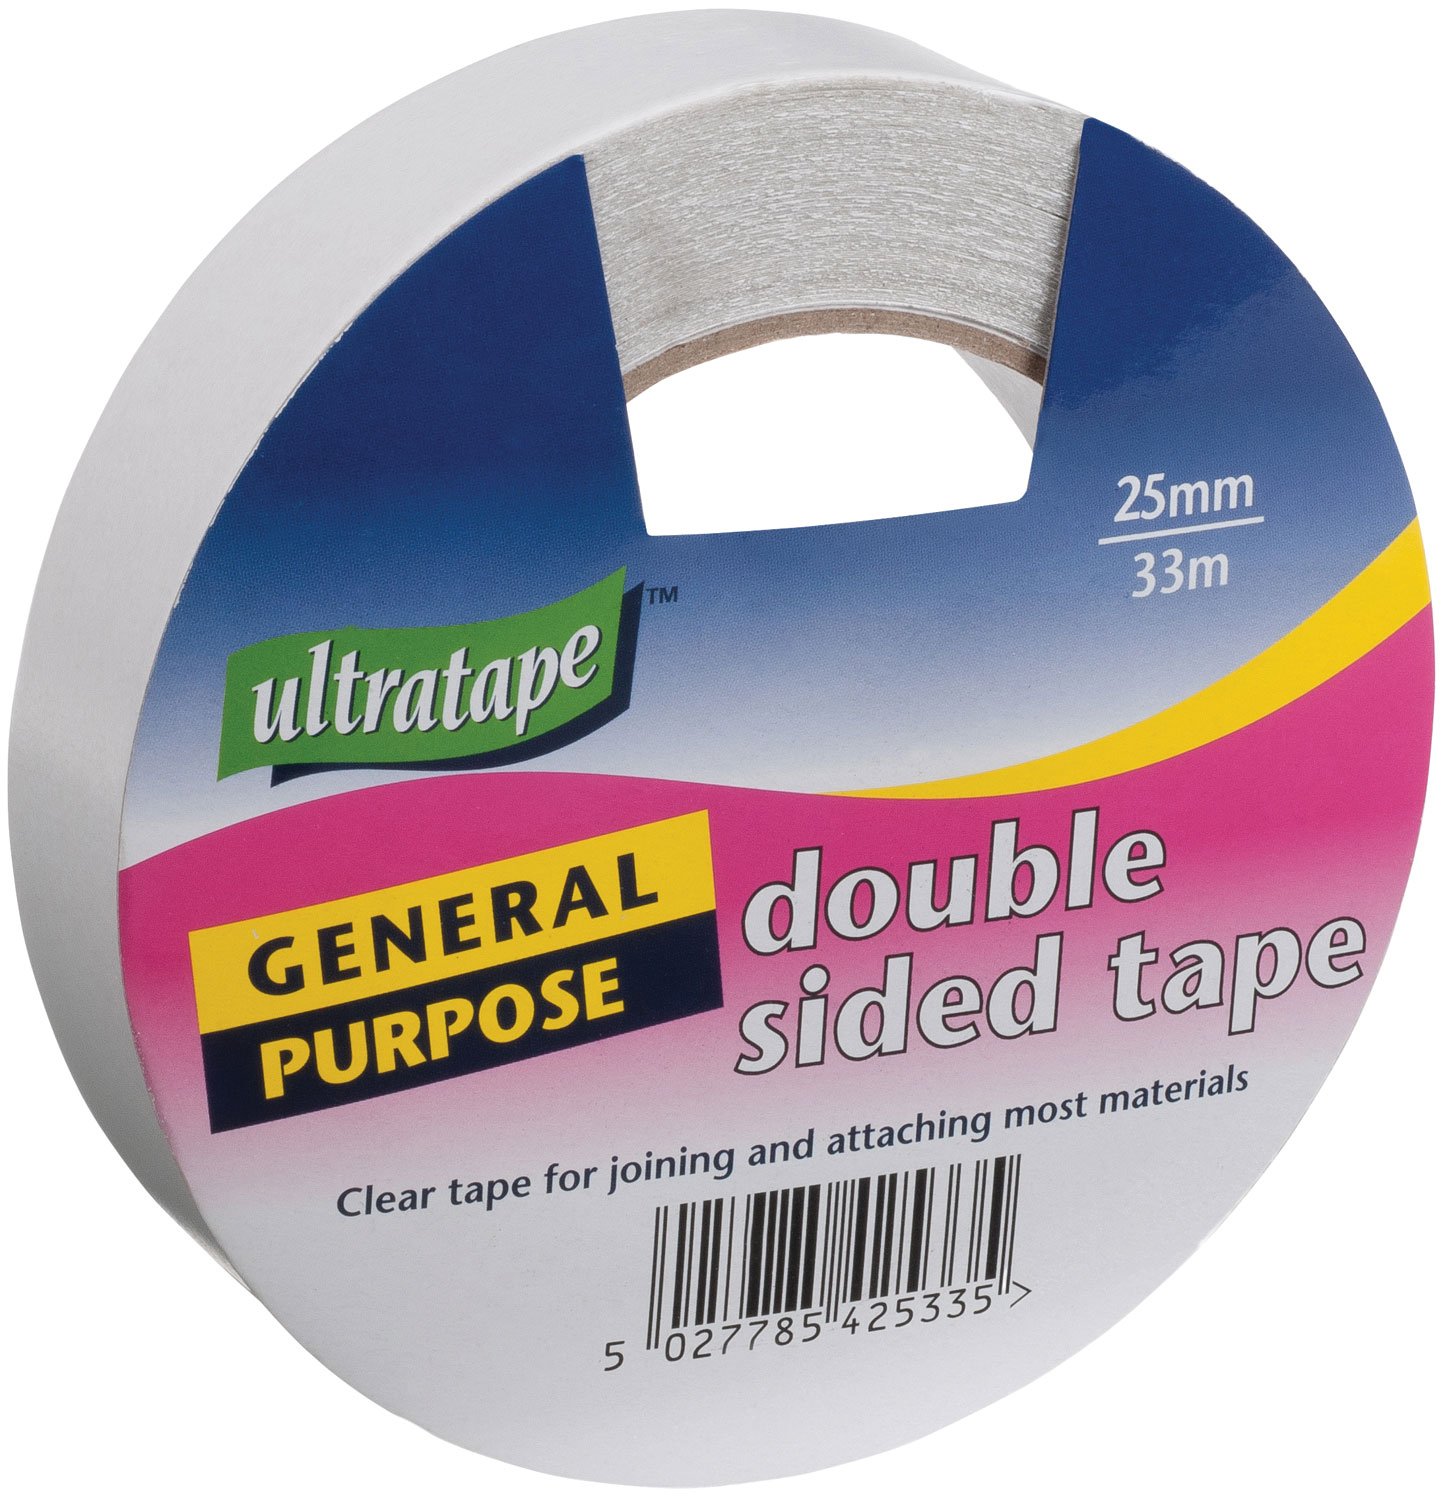 Ultratape Double Sided Tape Double Sided Tape 25mm x 33m